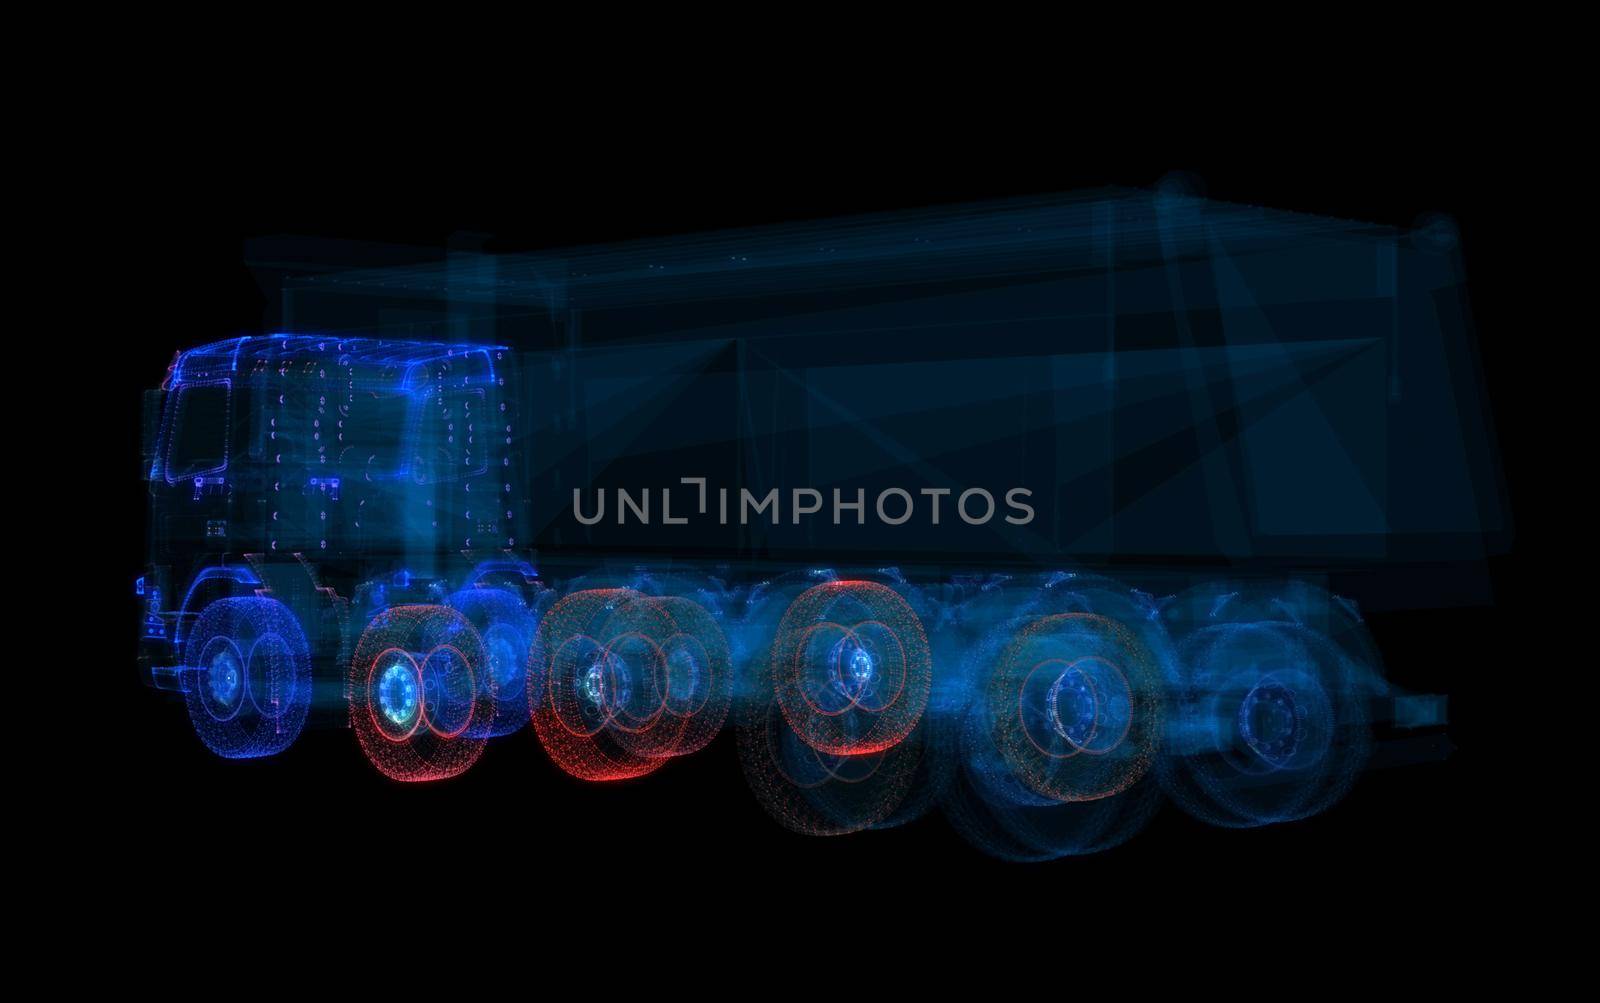 Truck Hologram. Transportation and Technology Concept. Interface element. 3d illustration